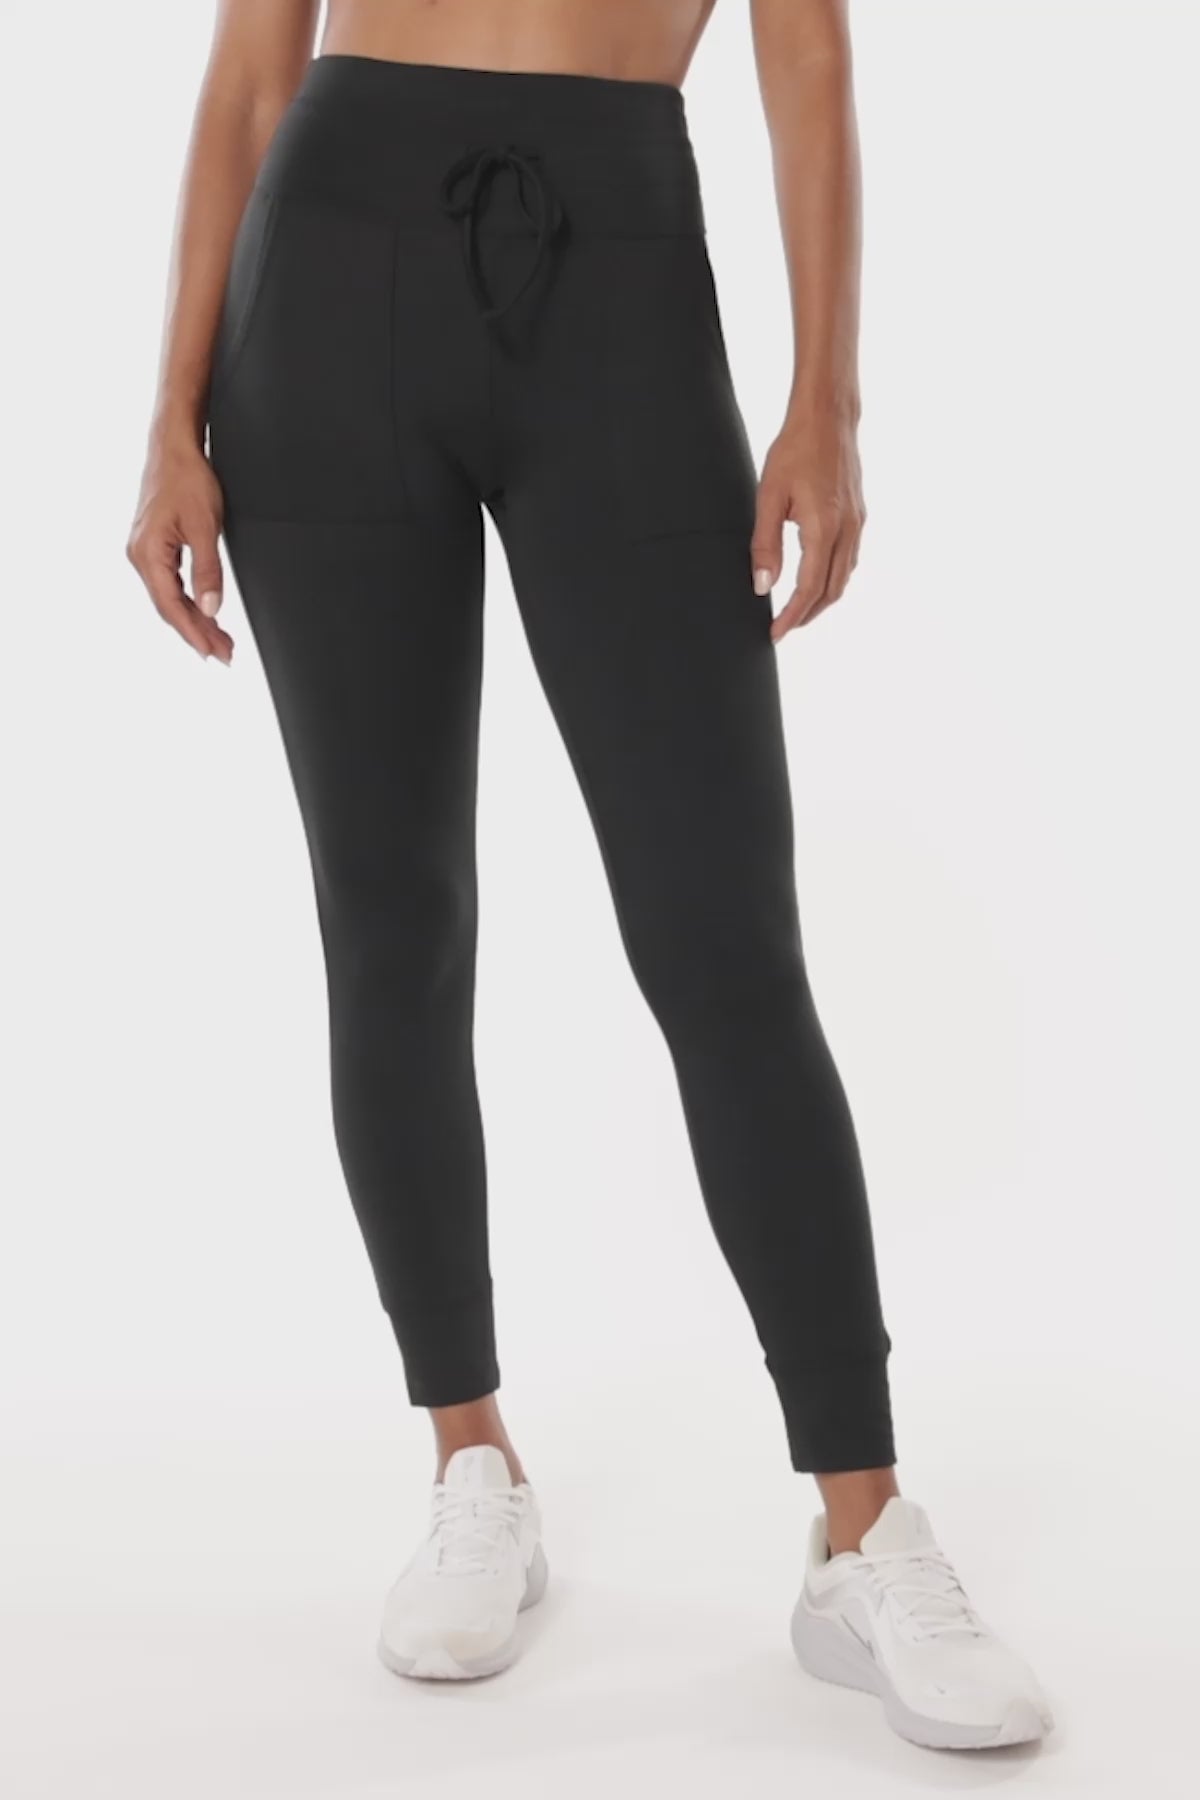 WILDFOX Demi Leggings Skinny Drawstring Sweatpants PANTS L Zip Pockets Grey  NEW | eBay